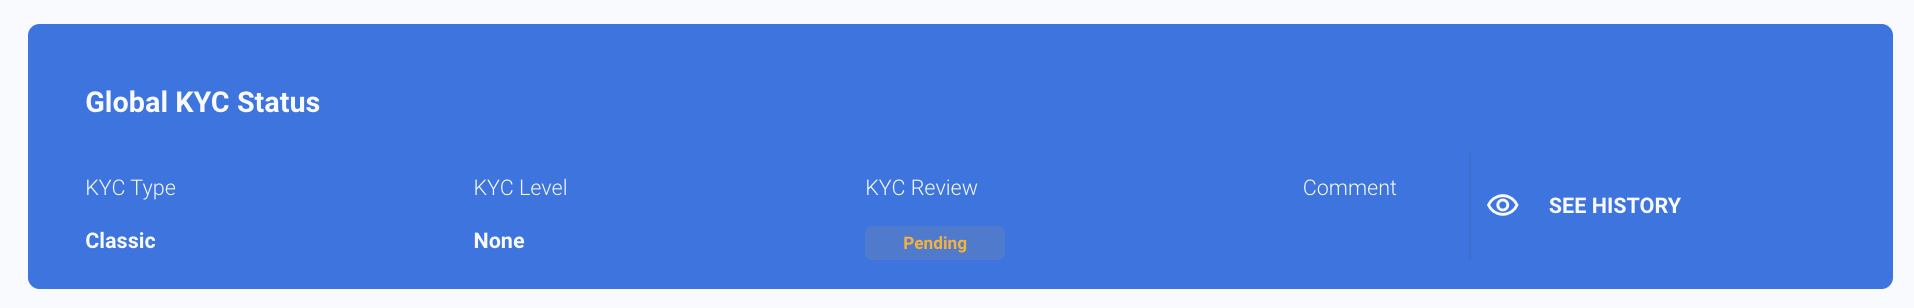 Global KYC Status section